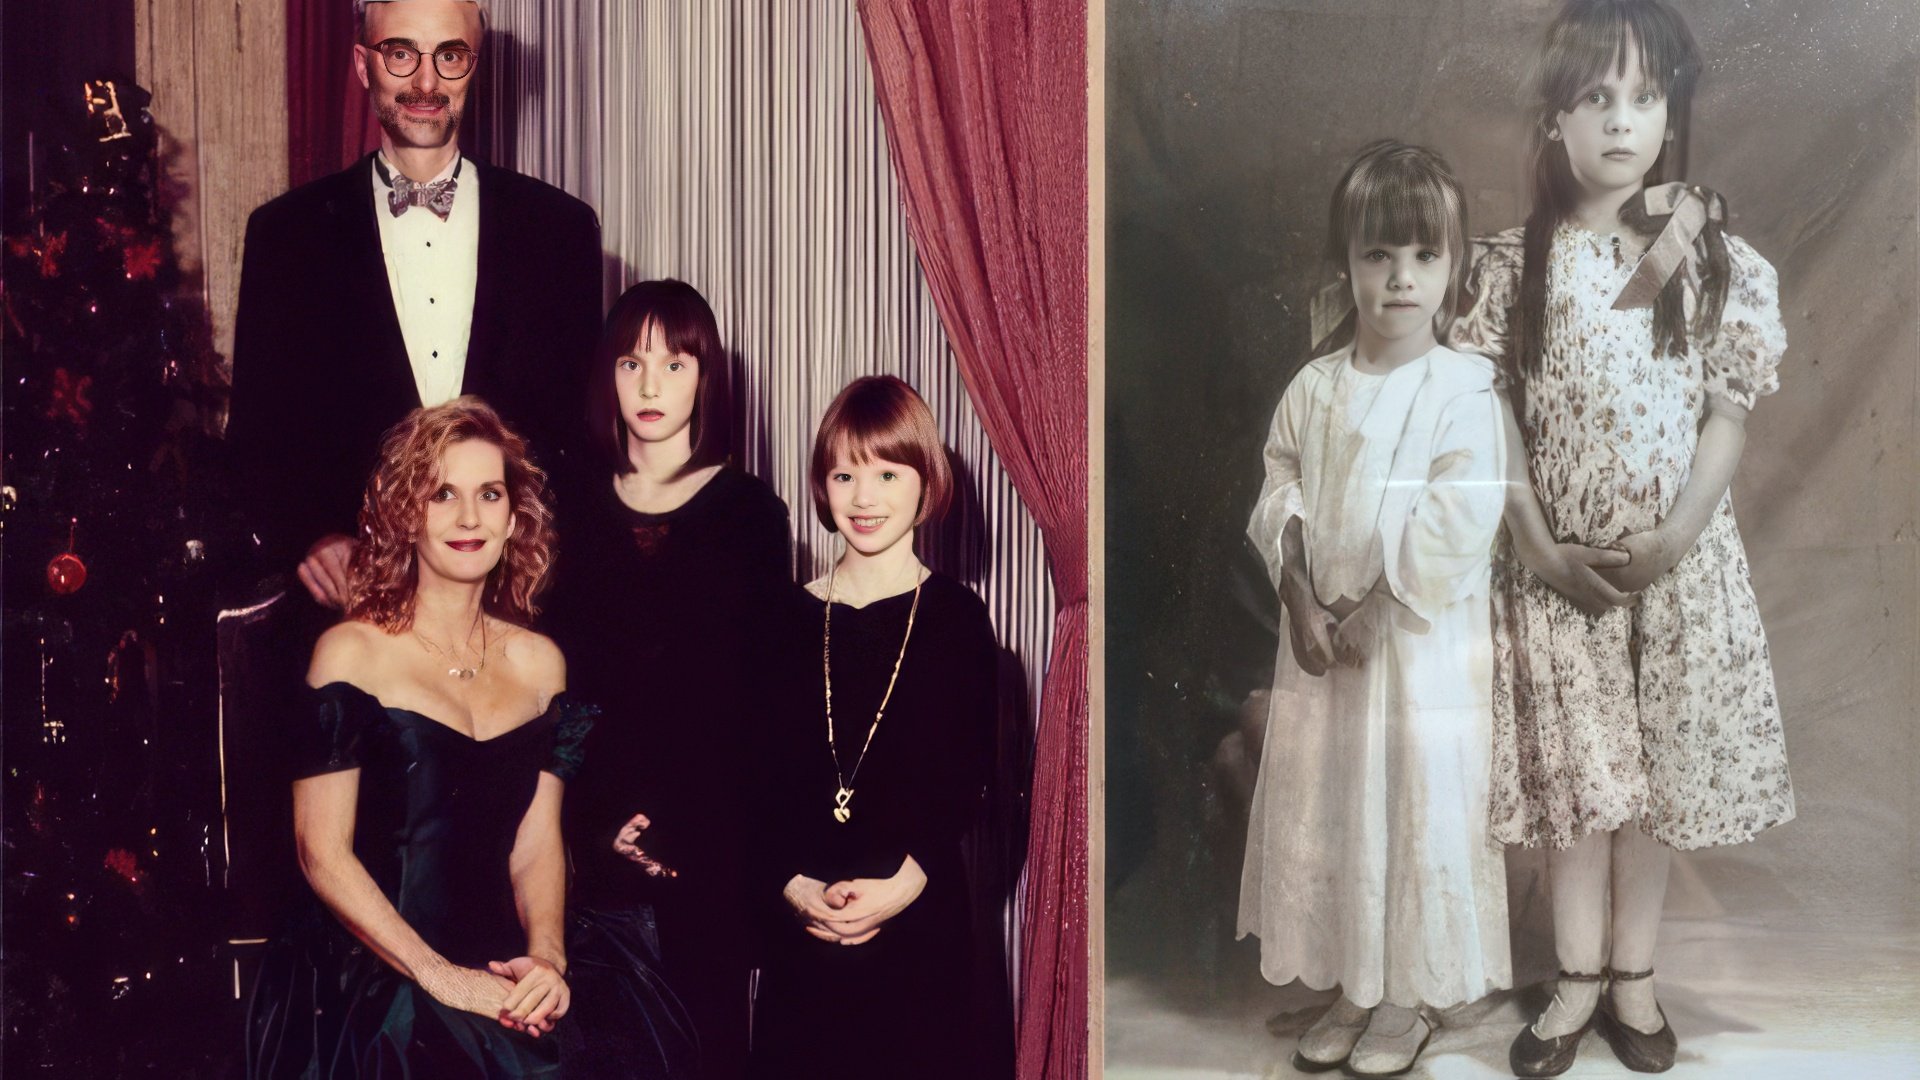 Mackenzie Davis with her family in her childhood